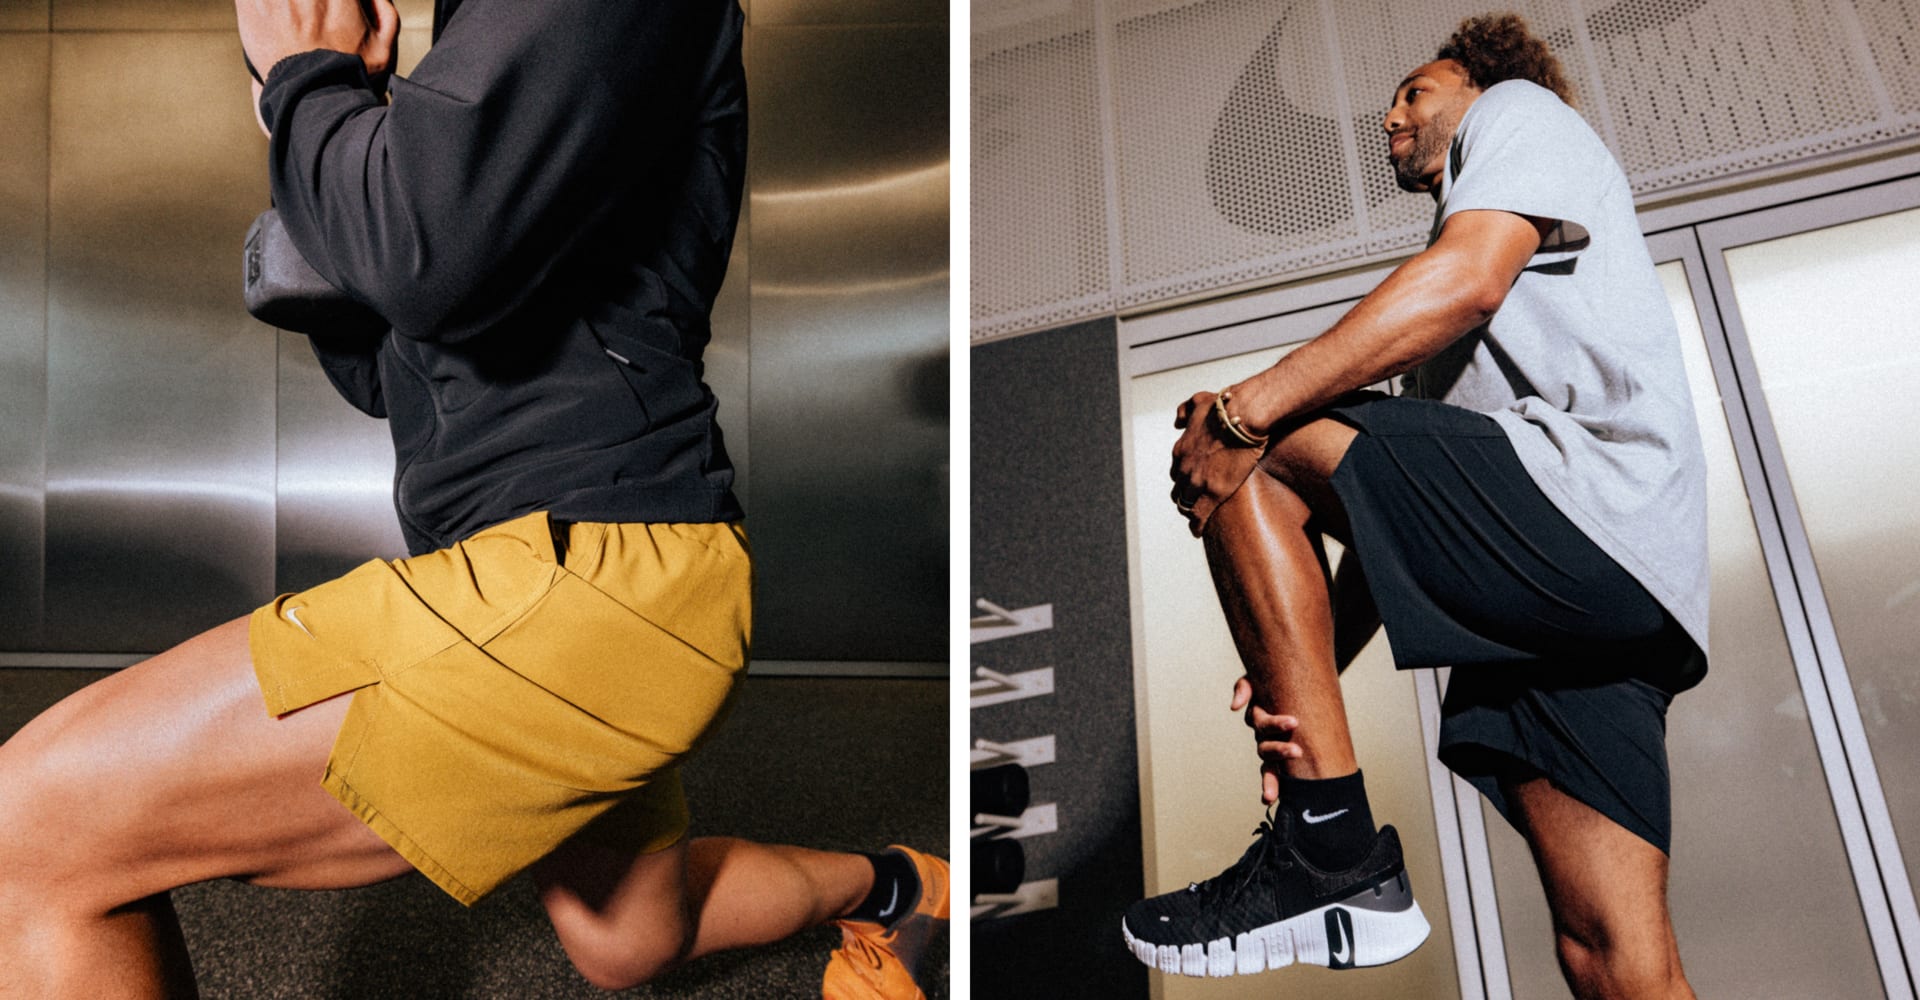 Nike Men's Unlimited Dri-FIT 7 Unlined Versatile Shorts in Blue - ShopStyle